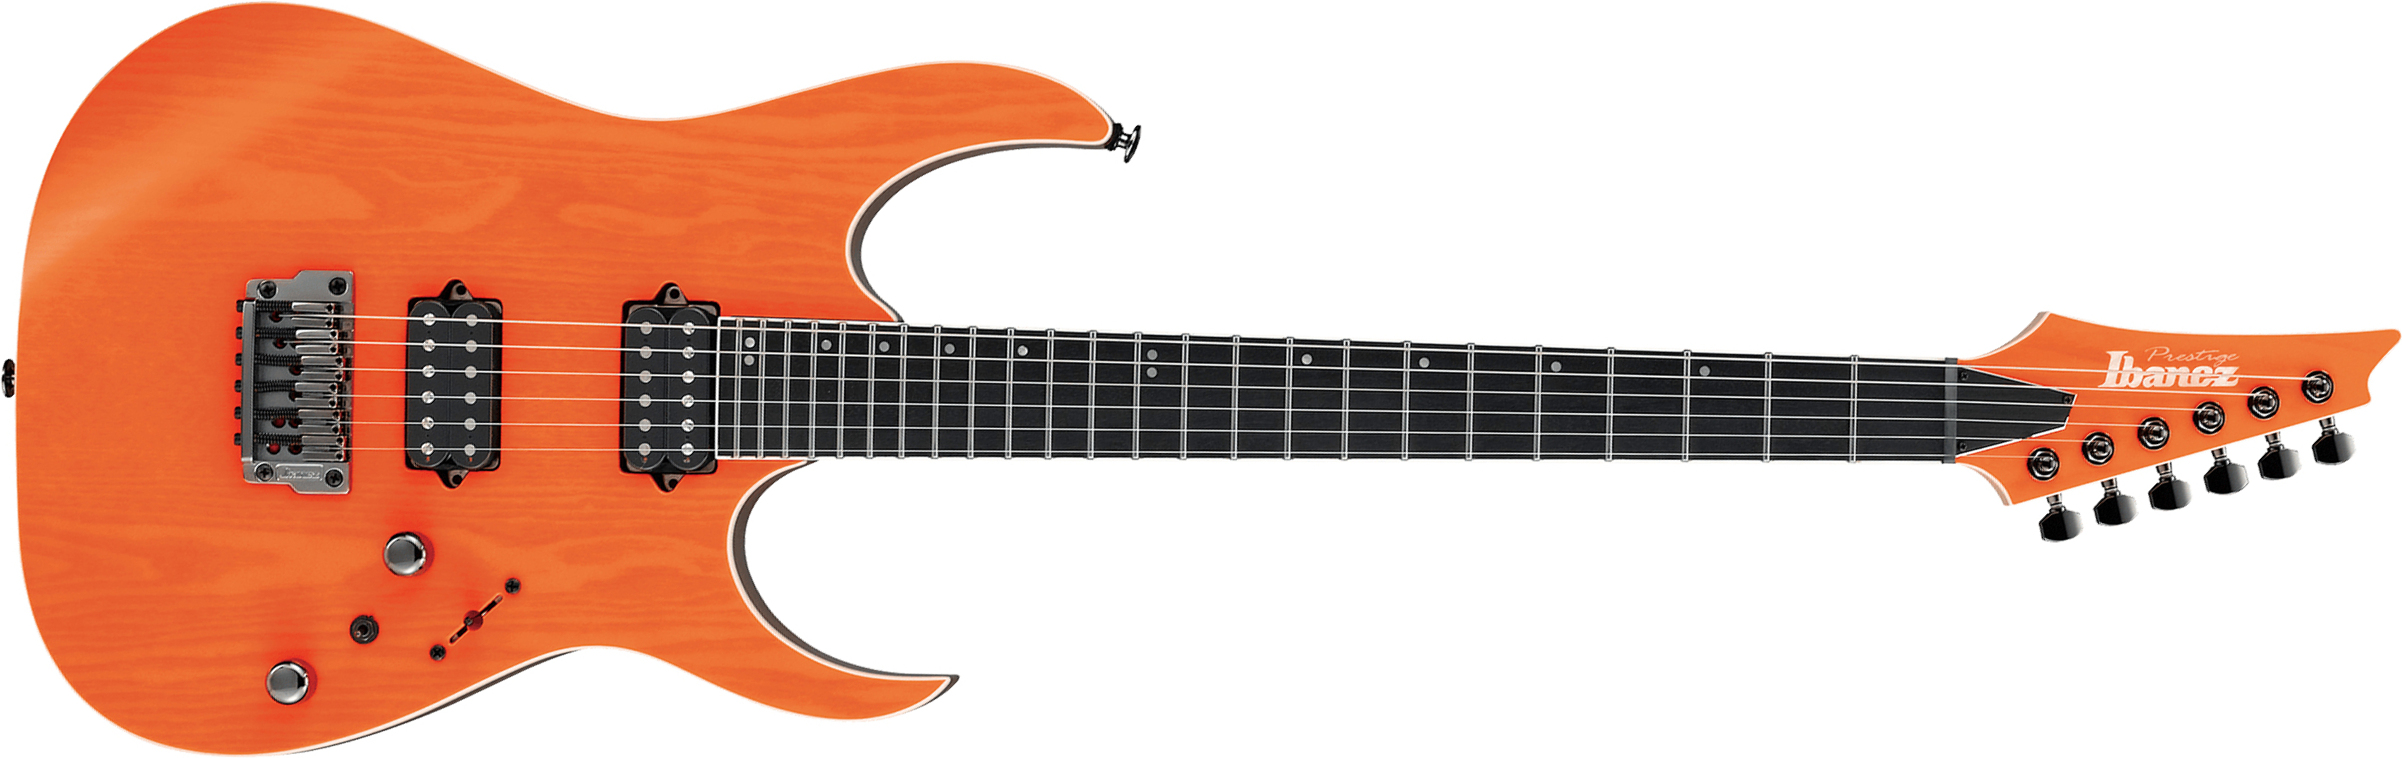 Ibanez Rgr5221 Tfr Prestige Jap Ht Bare Knuckle Hh Eb - Transparent Fluorescent Orange - Str shape electric guitar - Main picture